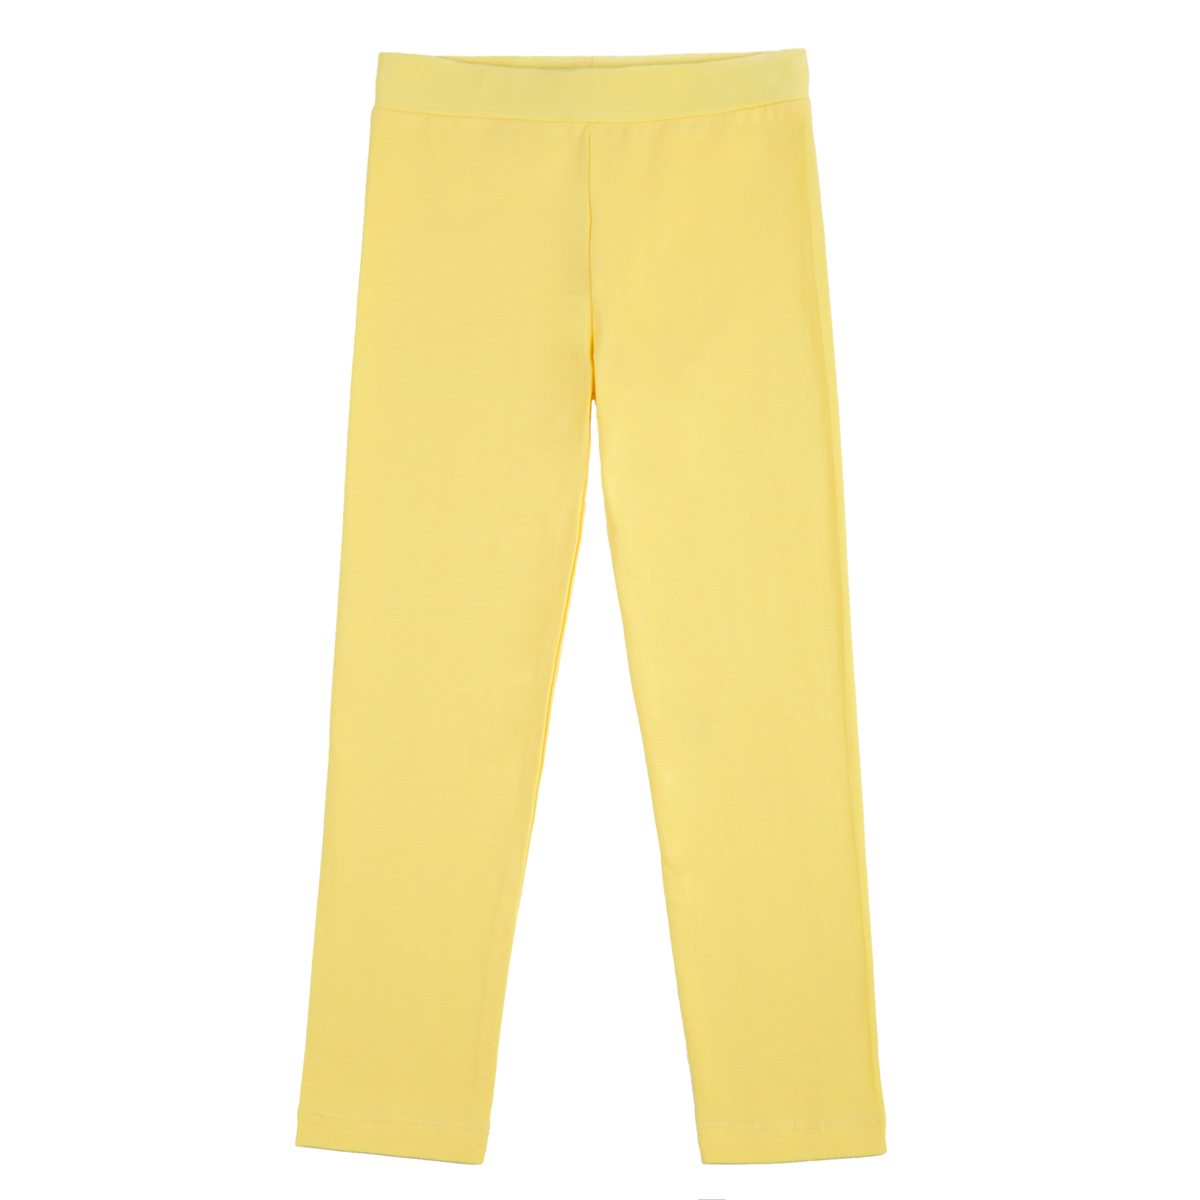 Желтые лосины. Желтые легинсы для девочки. Желтые брюки для девочки. Желтые штаны для девочек. Желтые брюки на мальчика.